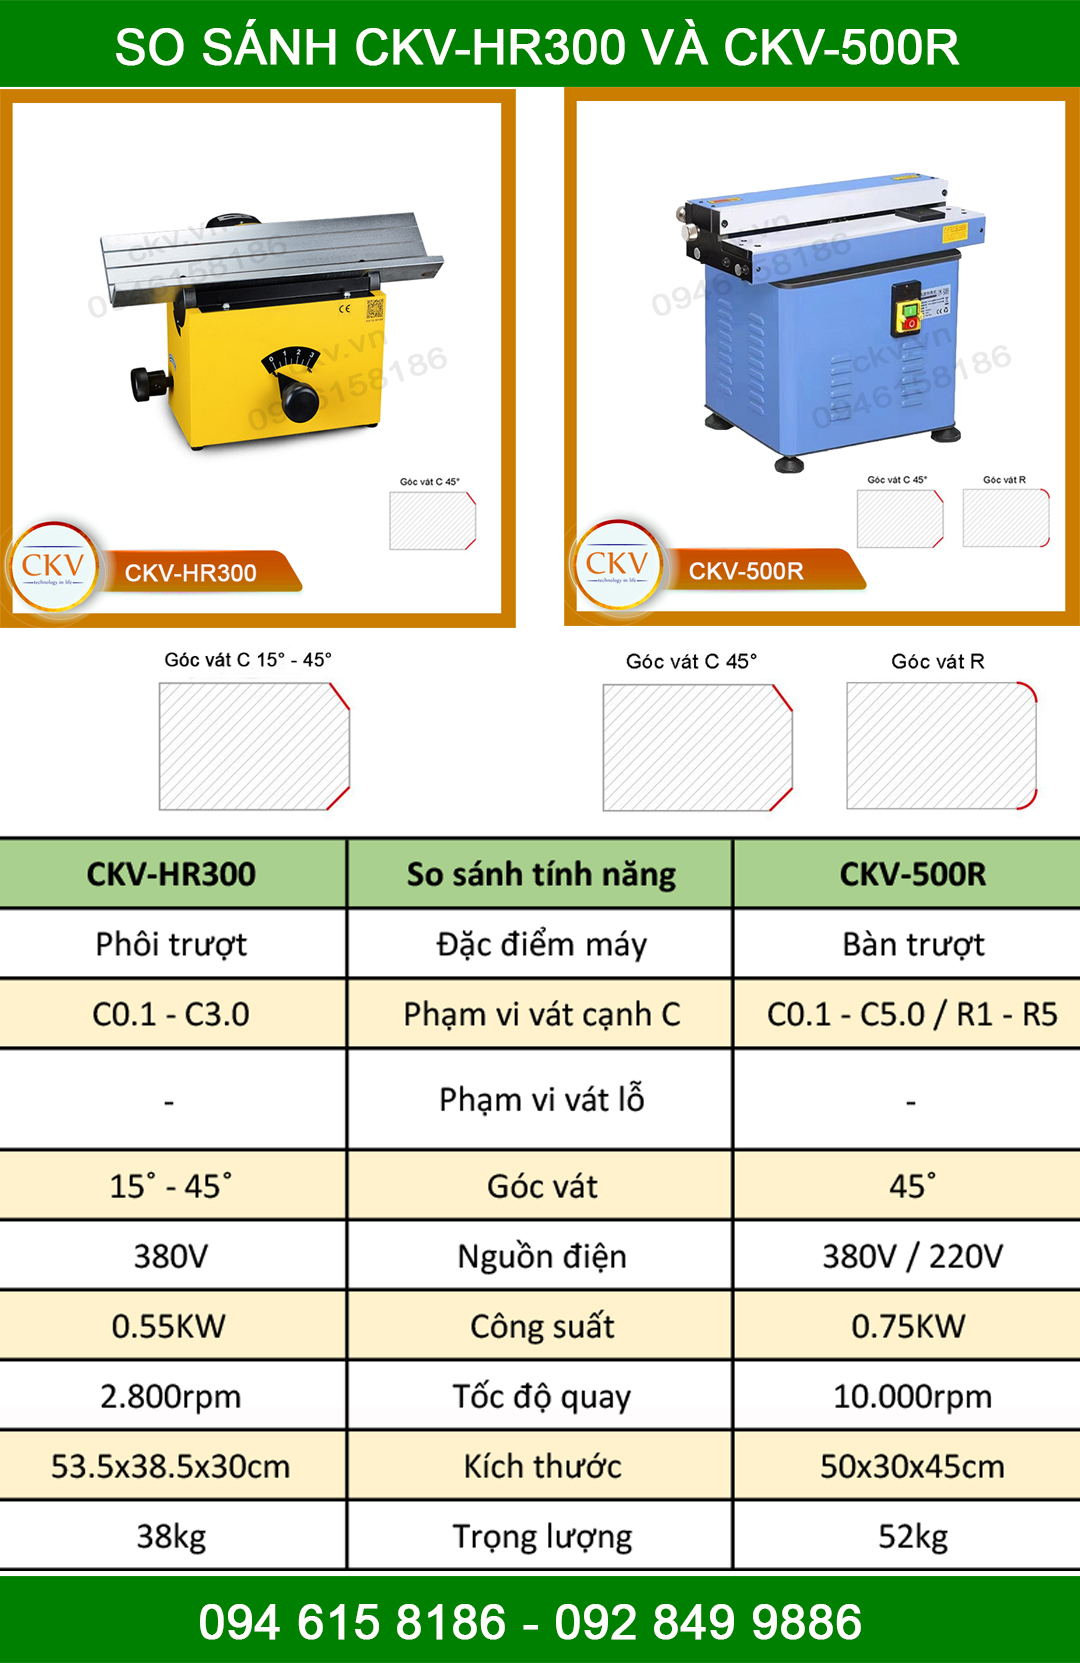 So sánh CKV-HR300 với CKV-500R